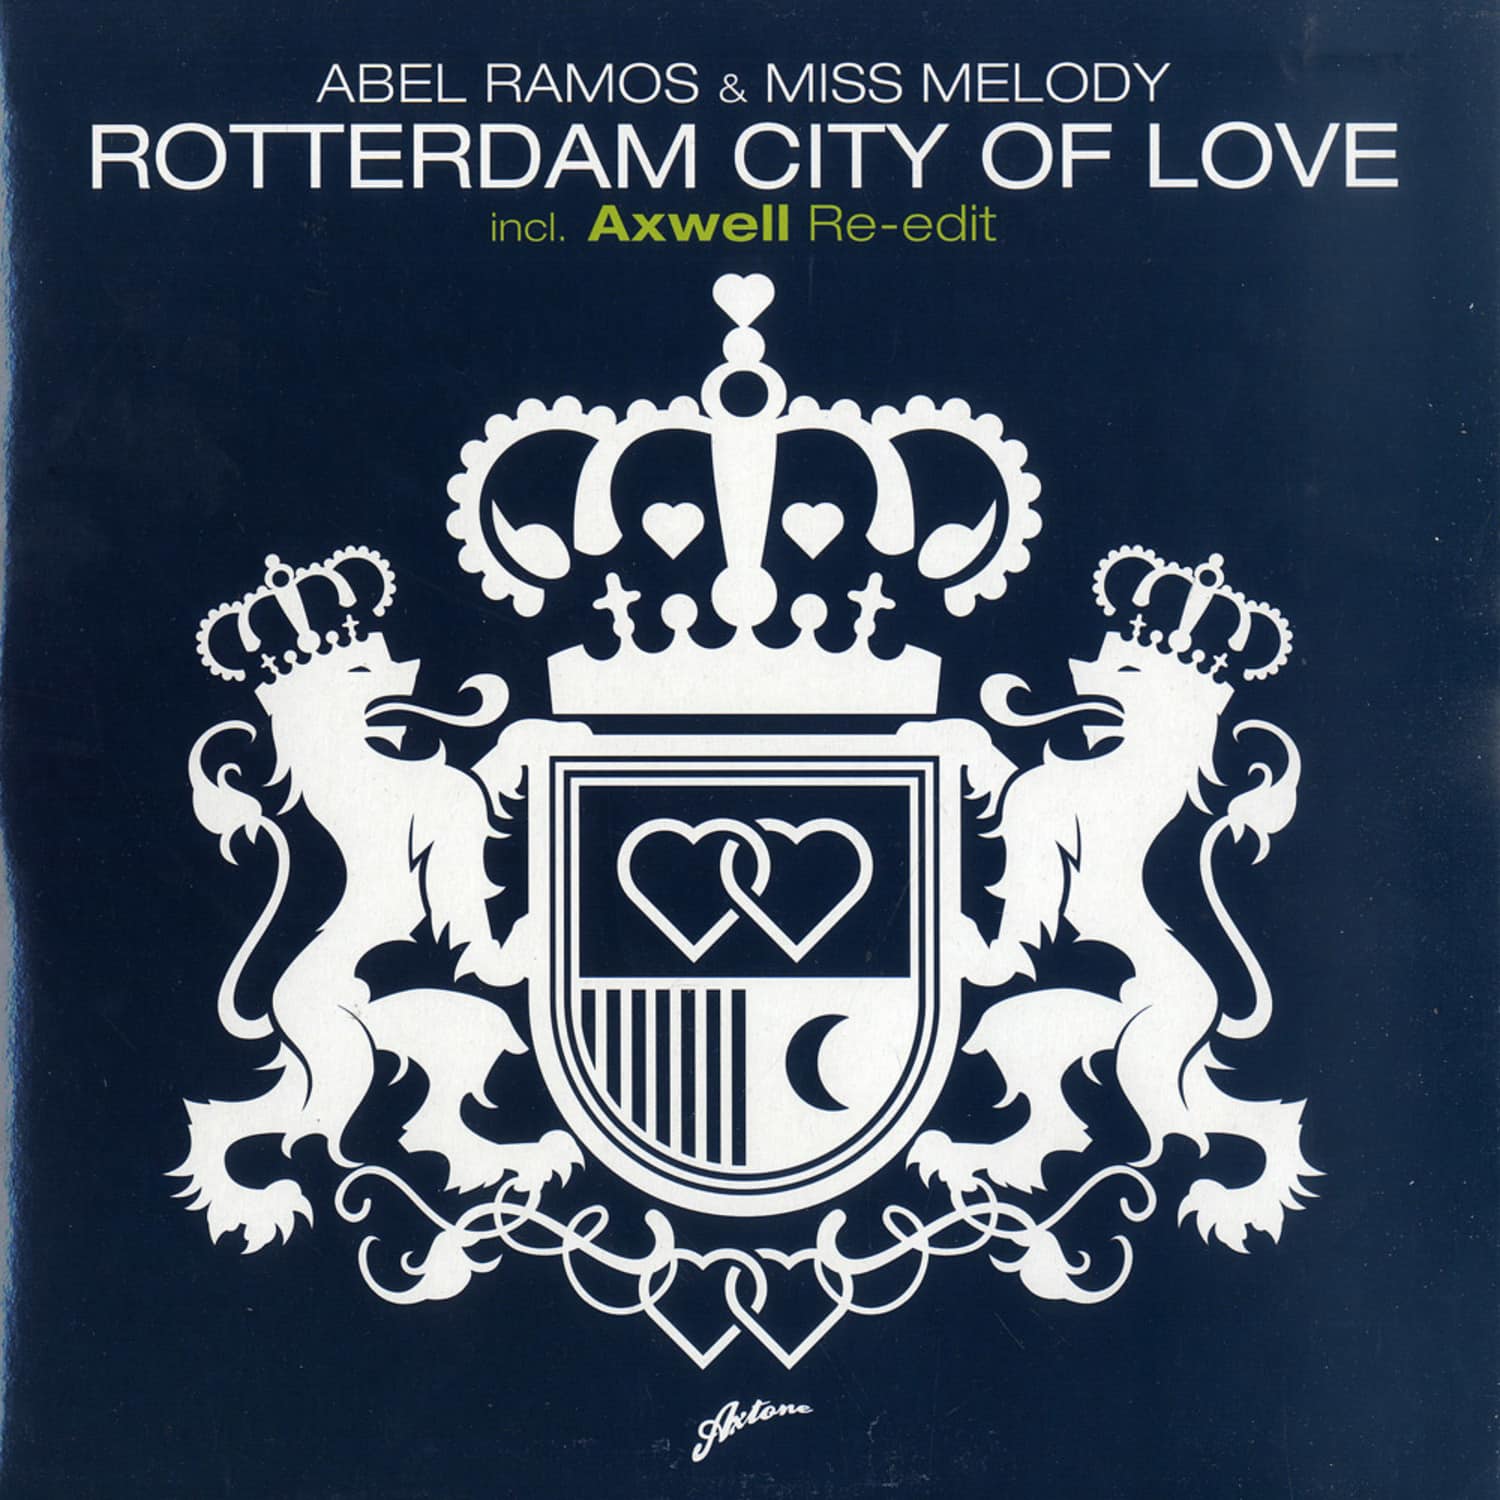 Abel Ramos & Miss Melody - ROTTERDAM CITY OF LOVE / AXWELL RE-EDIT